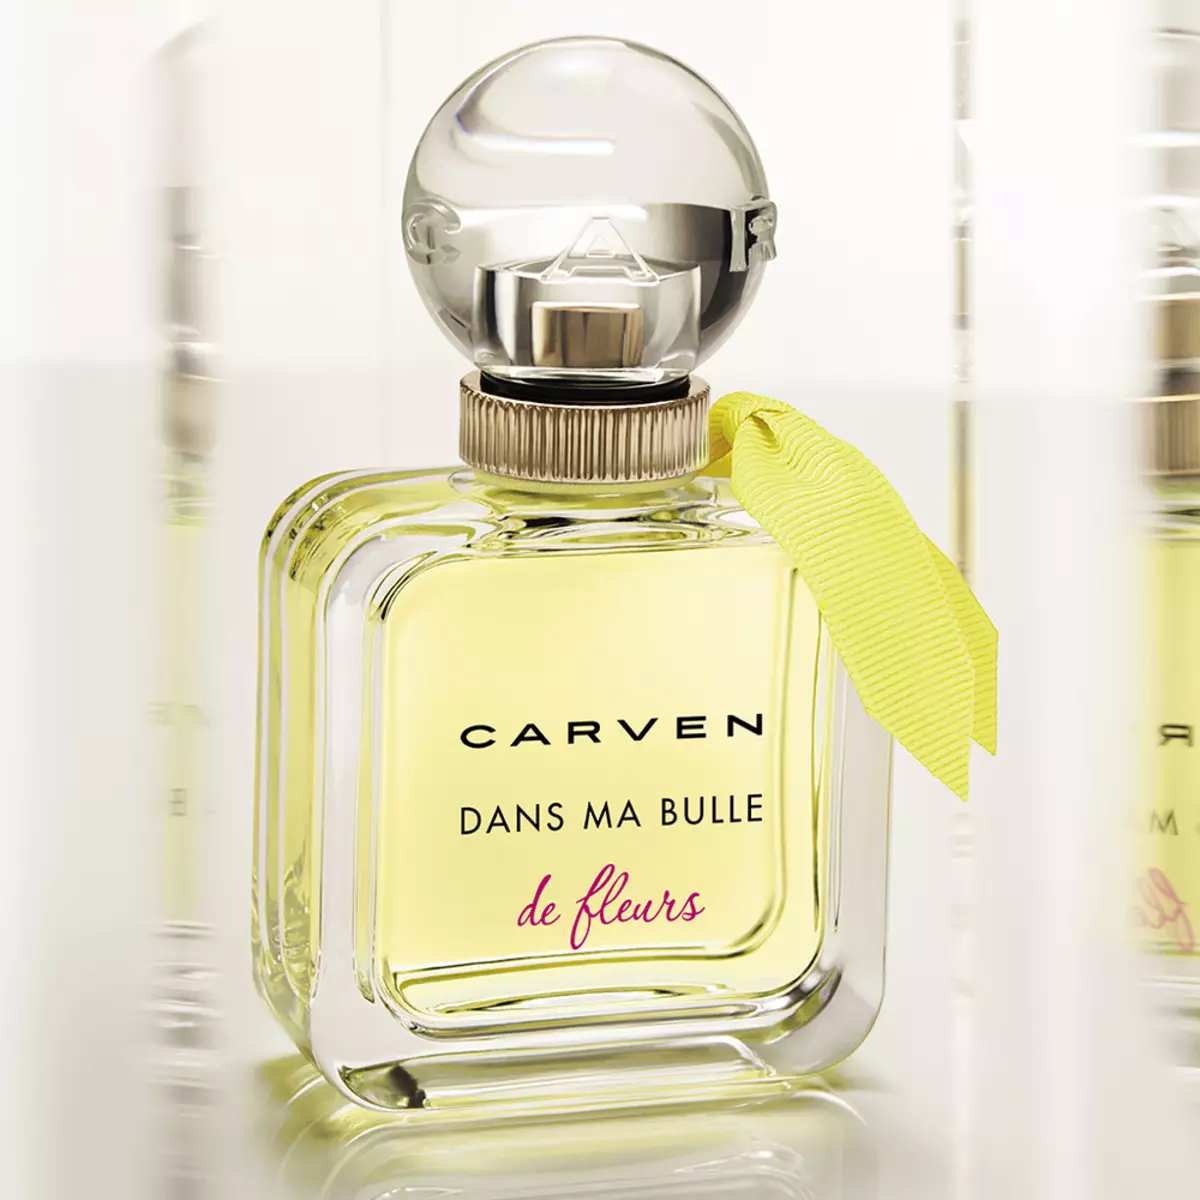 Parfum Carven: Parfum Wanita Le Parfum, L'Eau De Toilette Toilette dan Dans Ma Bulle, Warnumery Water untuk Pria 25267_9